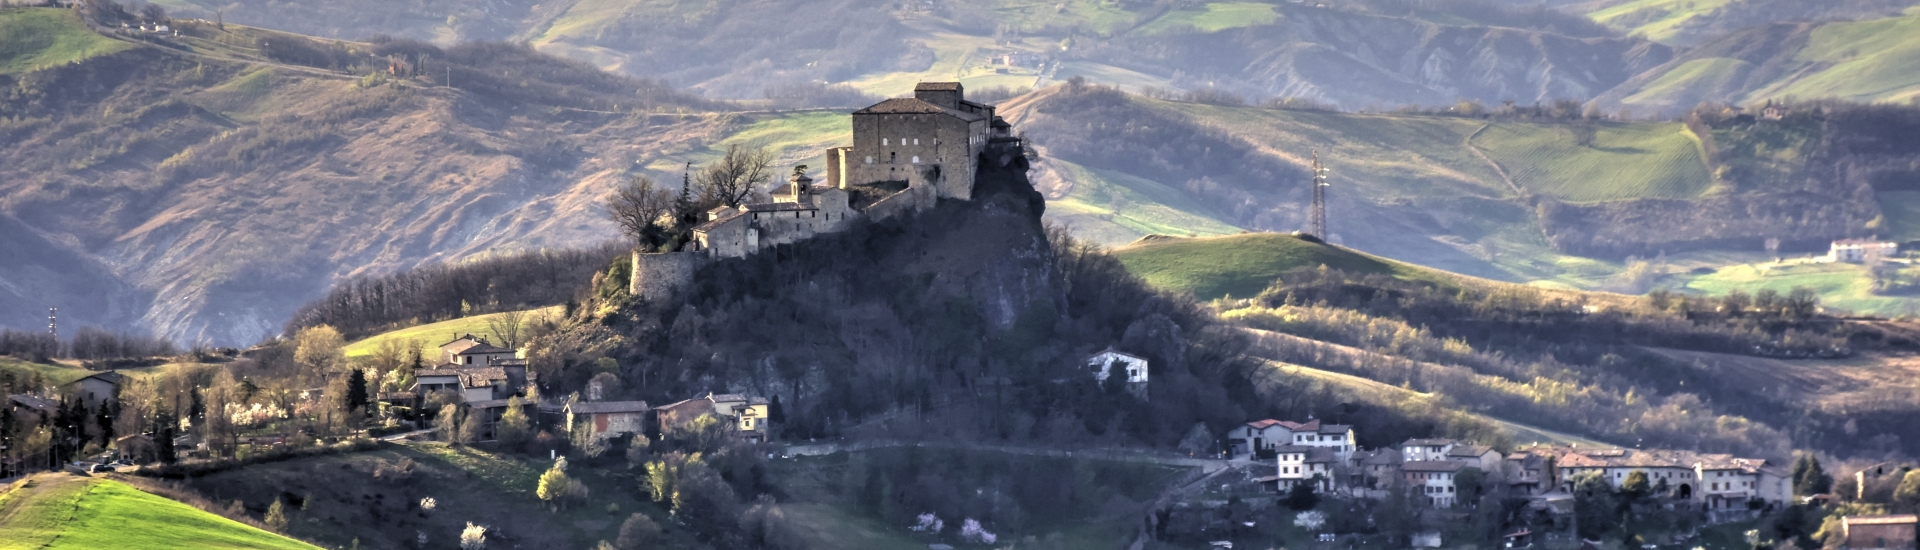 Castello di Rossena -  photo credits: |Emanuela Rabotti| - Associazione Culturale Matilde di Canossa